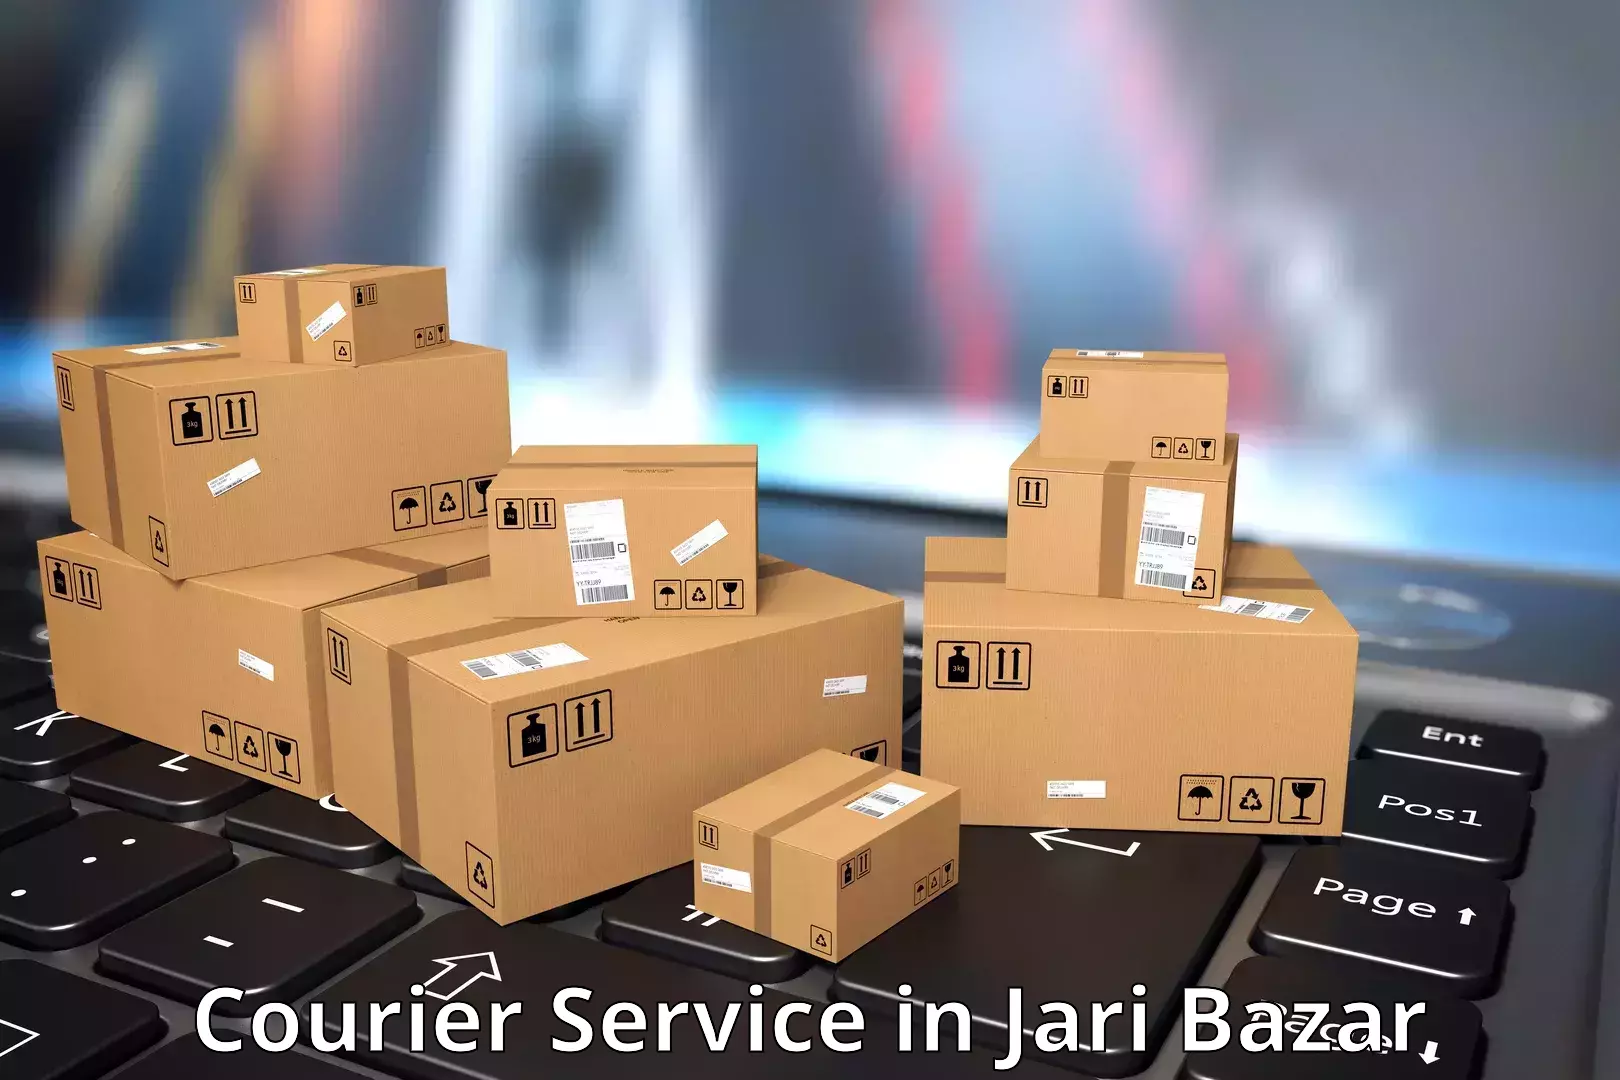 Efficient shipping operations in Jari Bazar